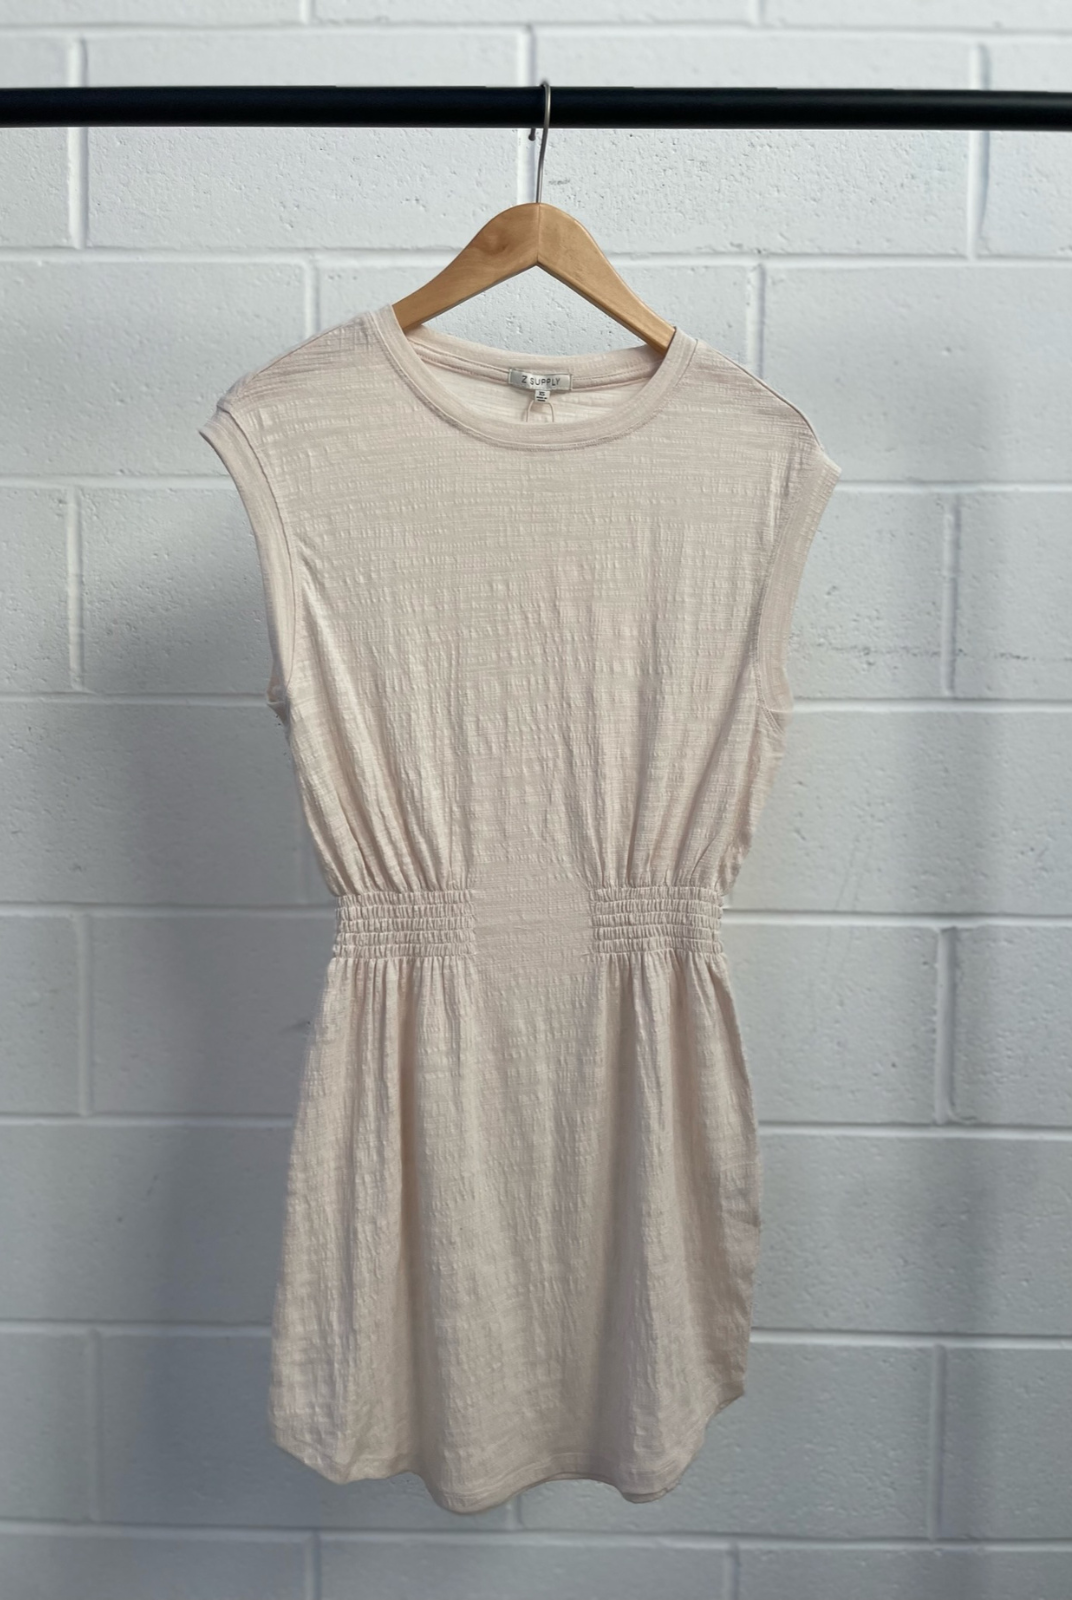 Z Supply Rowan Textured Knit Dress - Whisper White